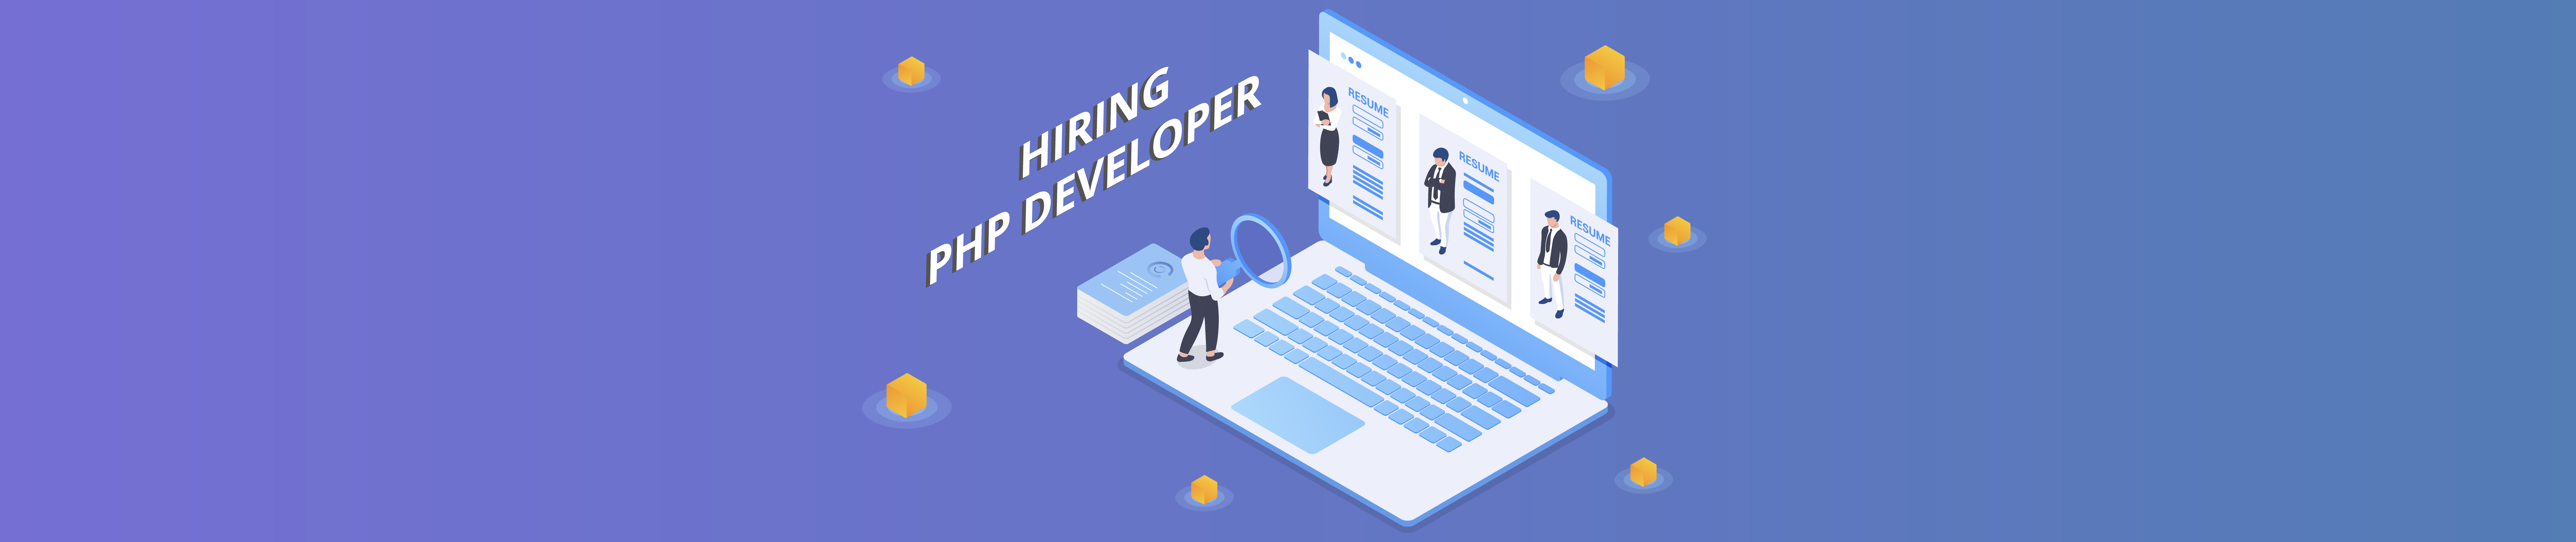 beehexa hiring php developer